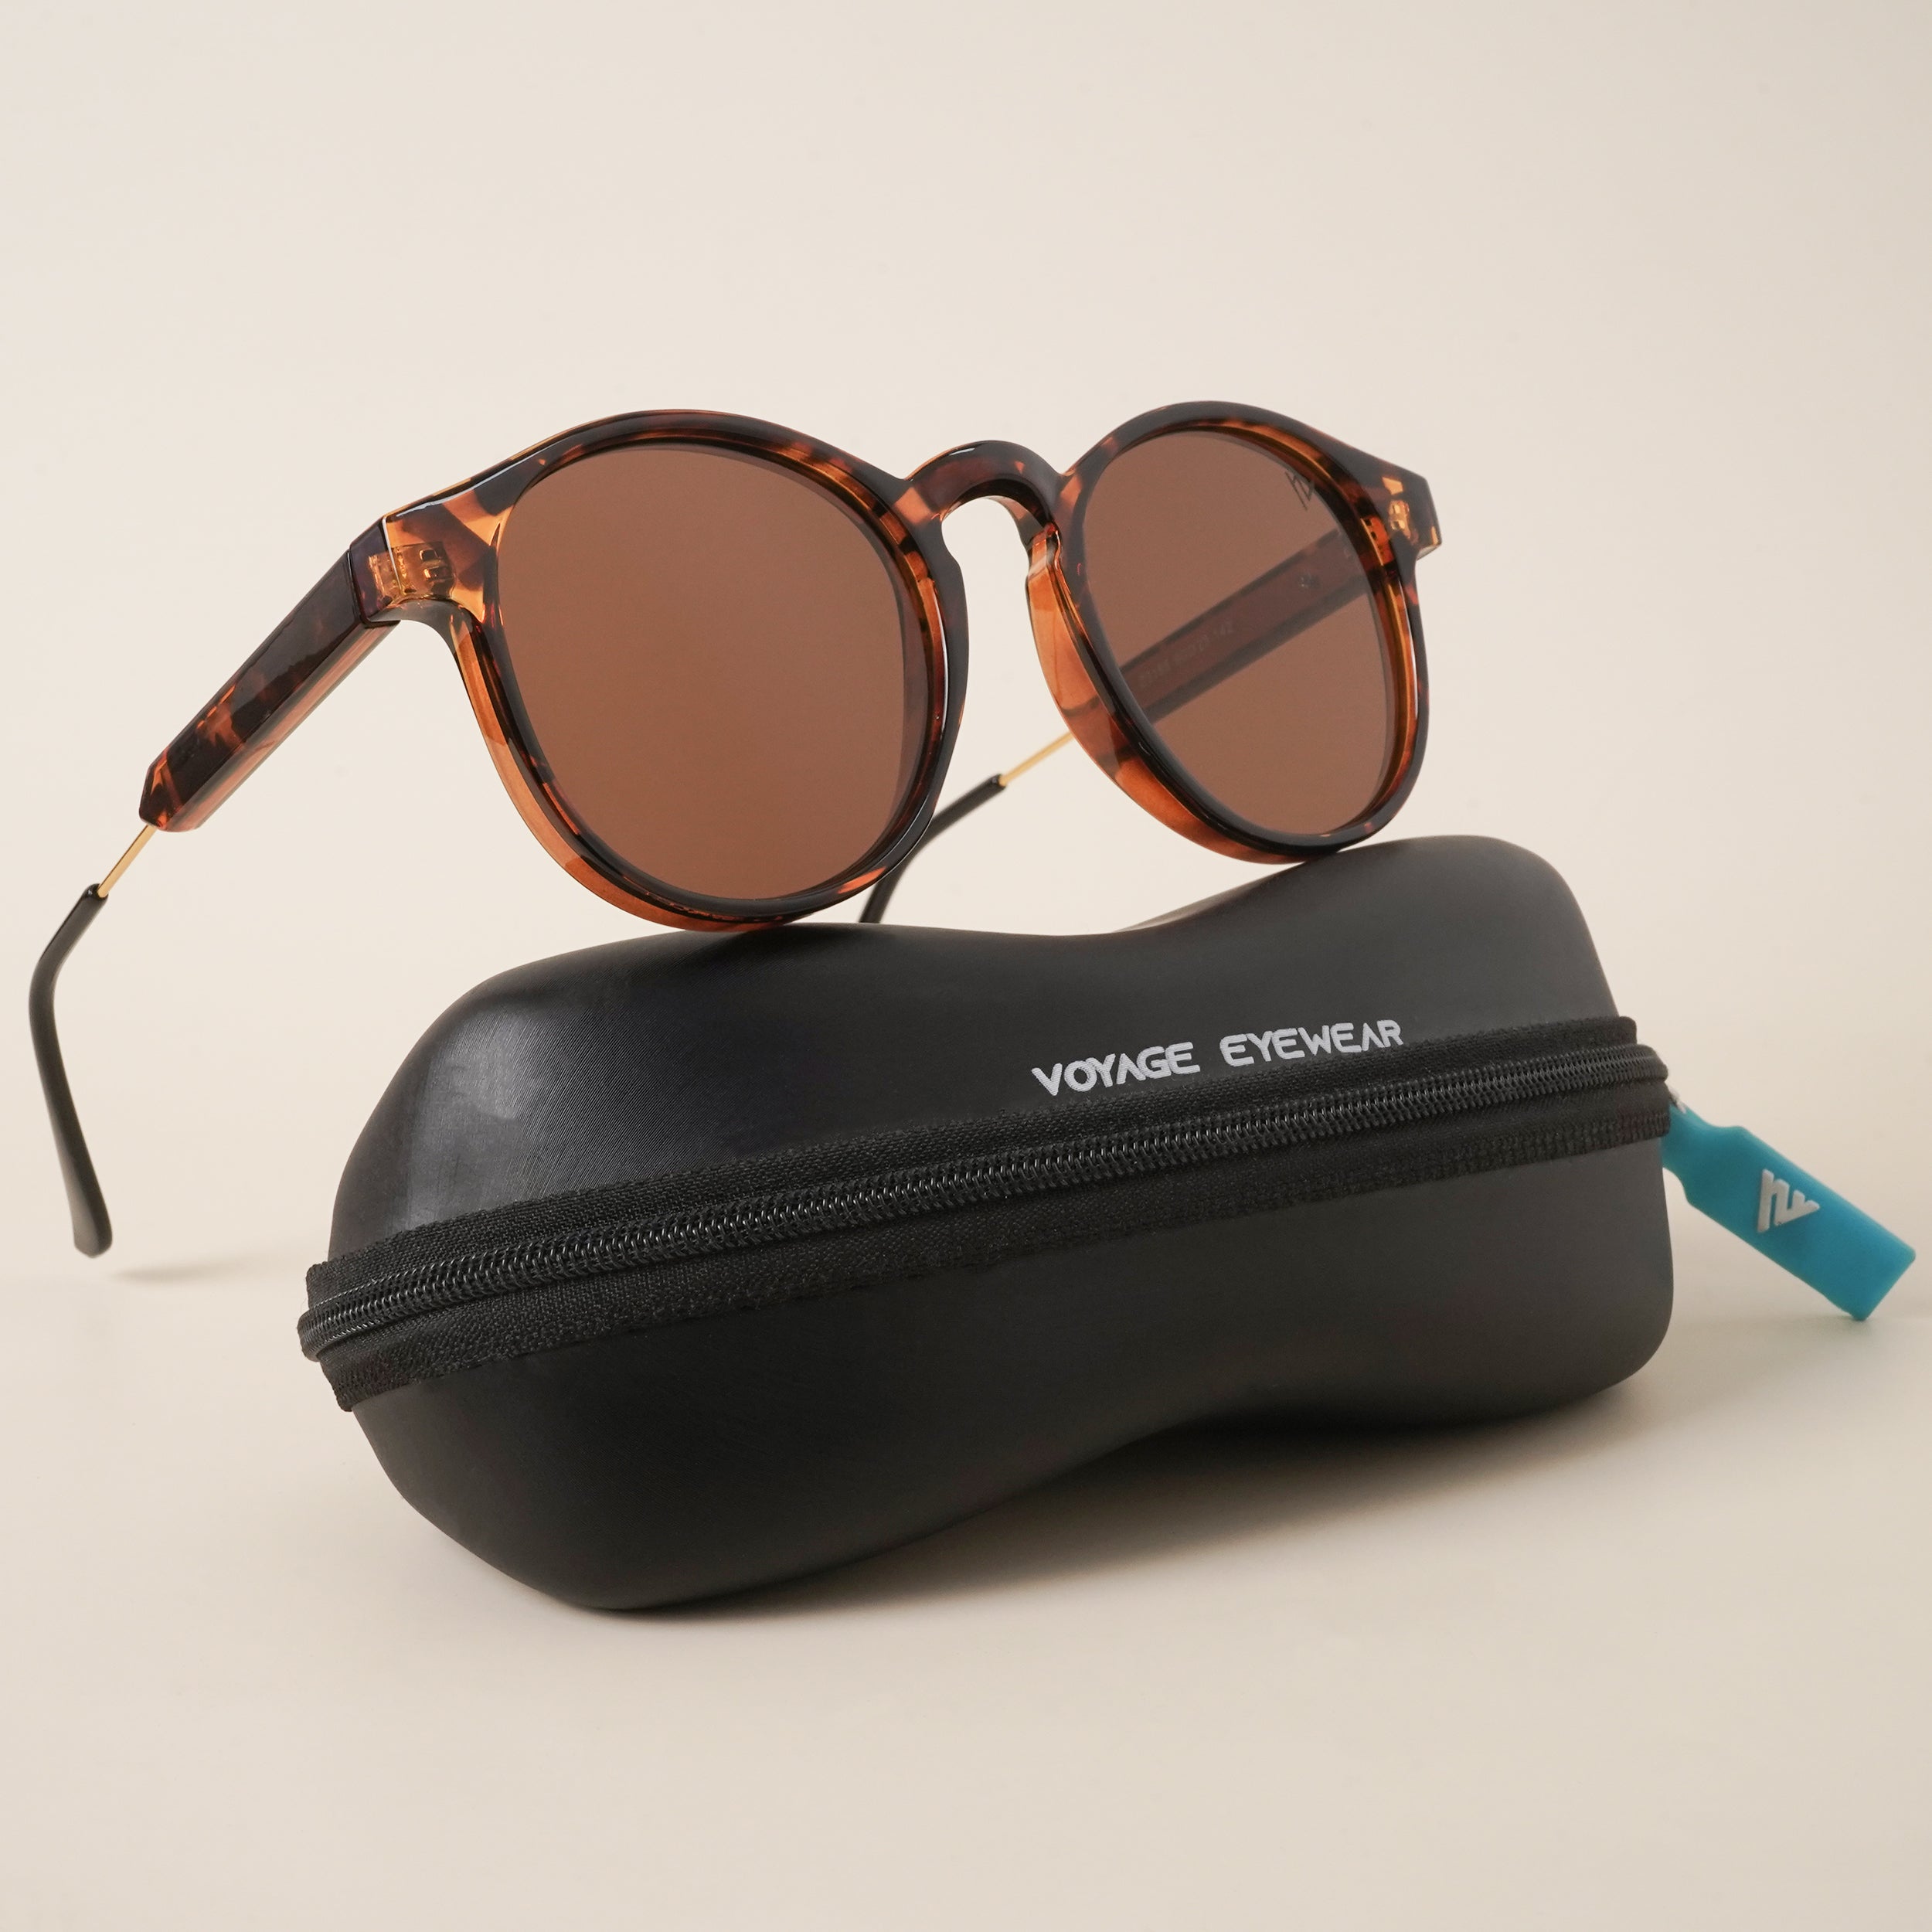 Voyage Demi Brown Round Sunglasses (3185MG3880)